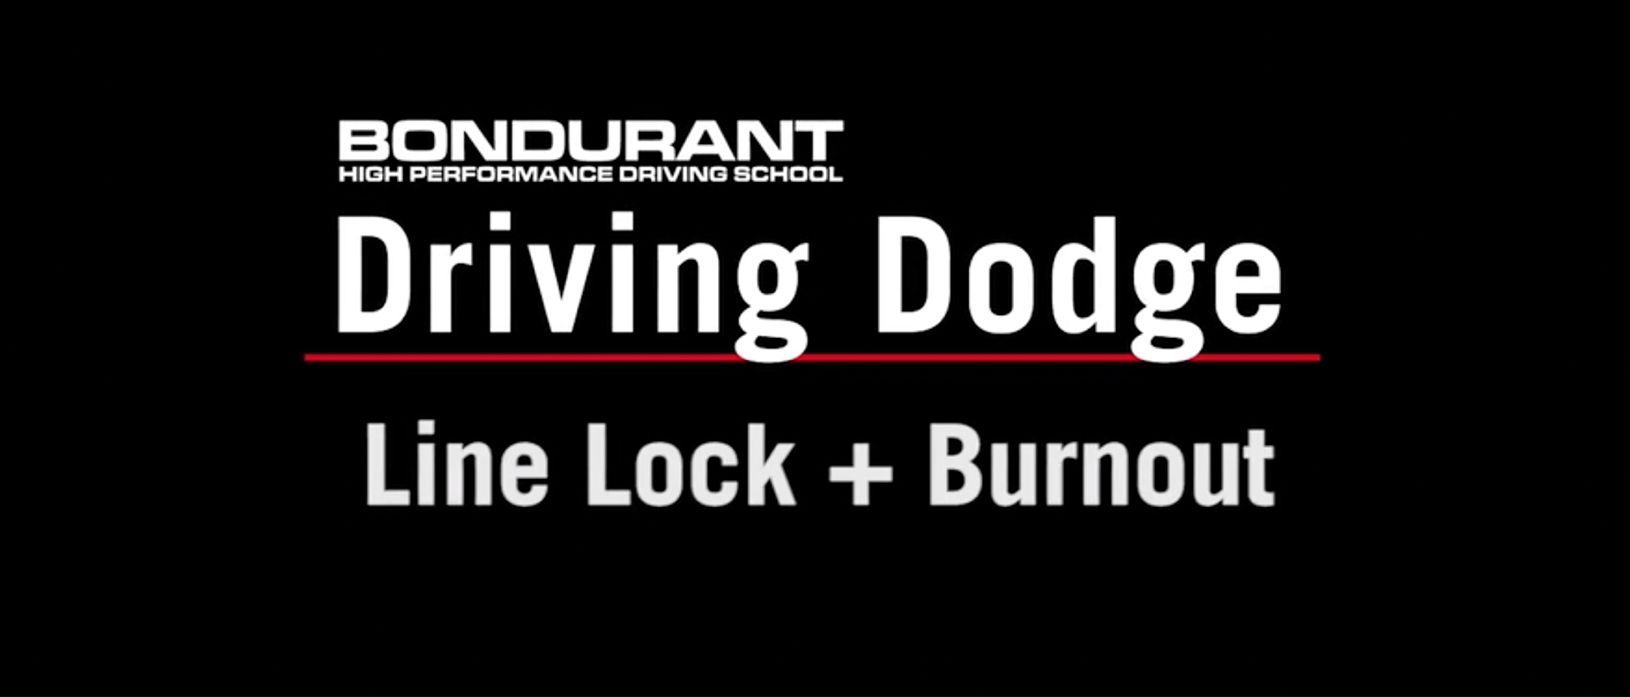 Driving Dodge: Bondurant – Line Lock and Burnout